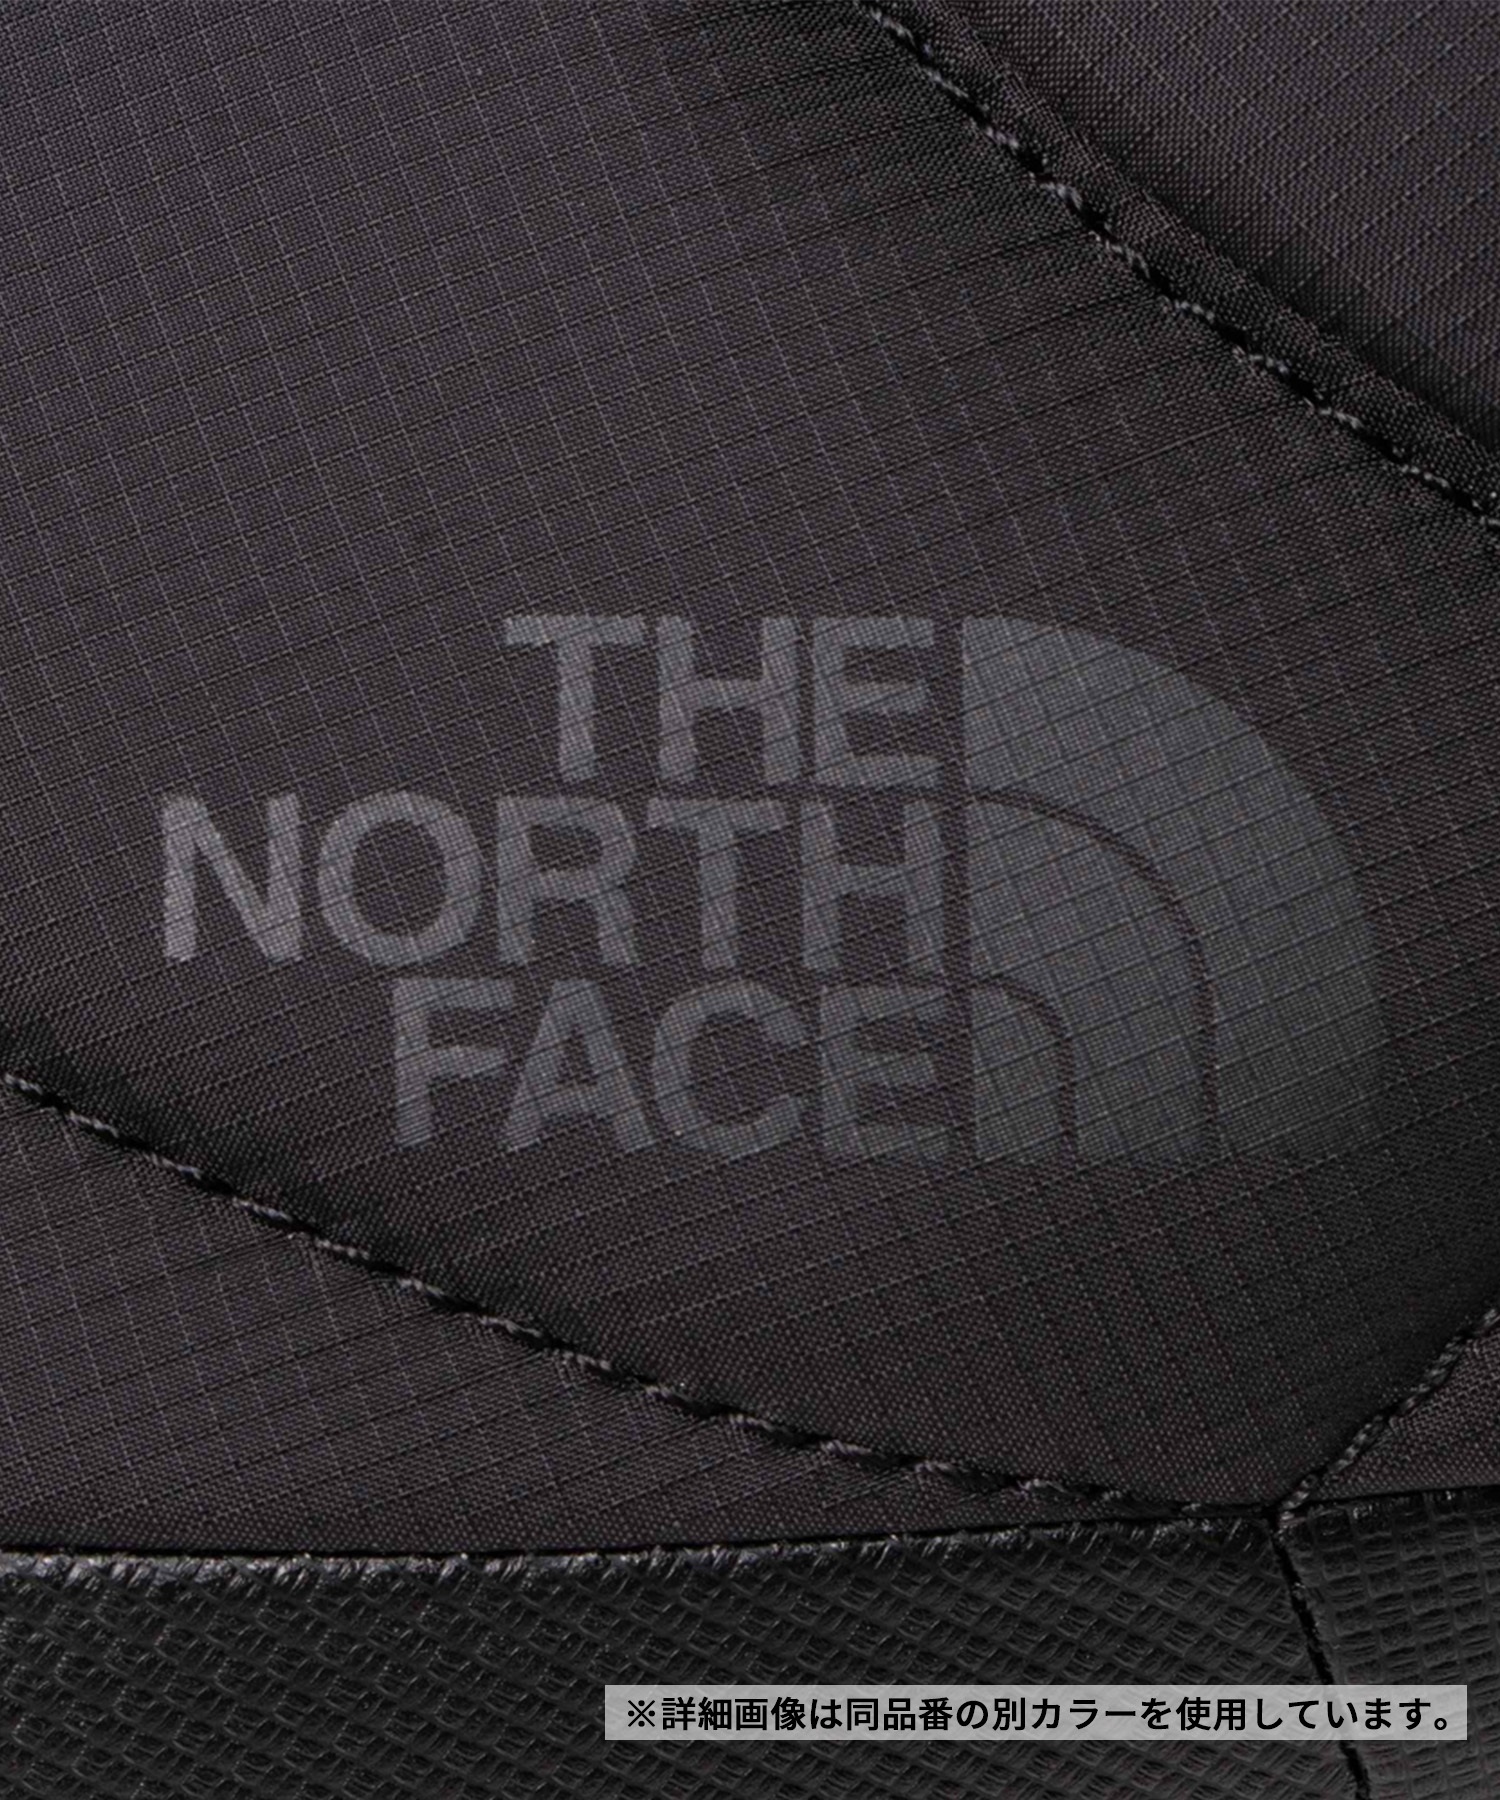 THE NORTH FACE/ザ・ノース・フェイス Nuptse Bootie WP VII ヌプシ ブーティー ウォータープルーフ 7 メンズ ブーツ 防水 防寒 軽量 NF52272 WB(WB-23.0cm)